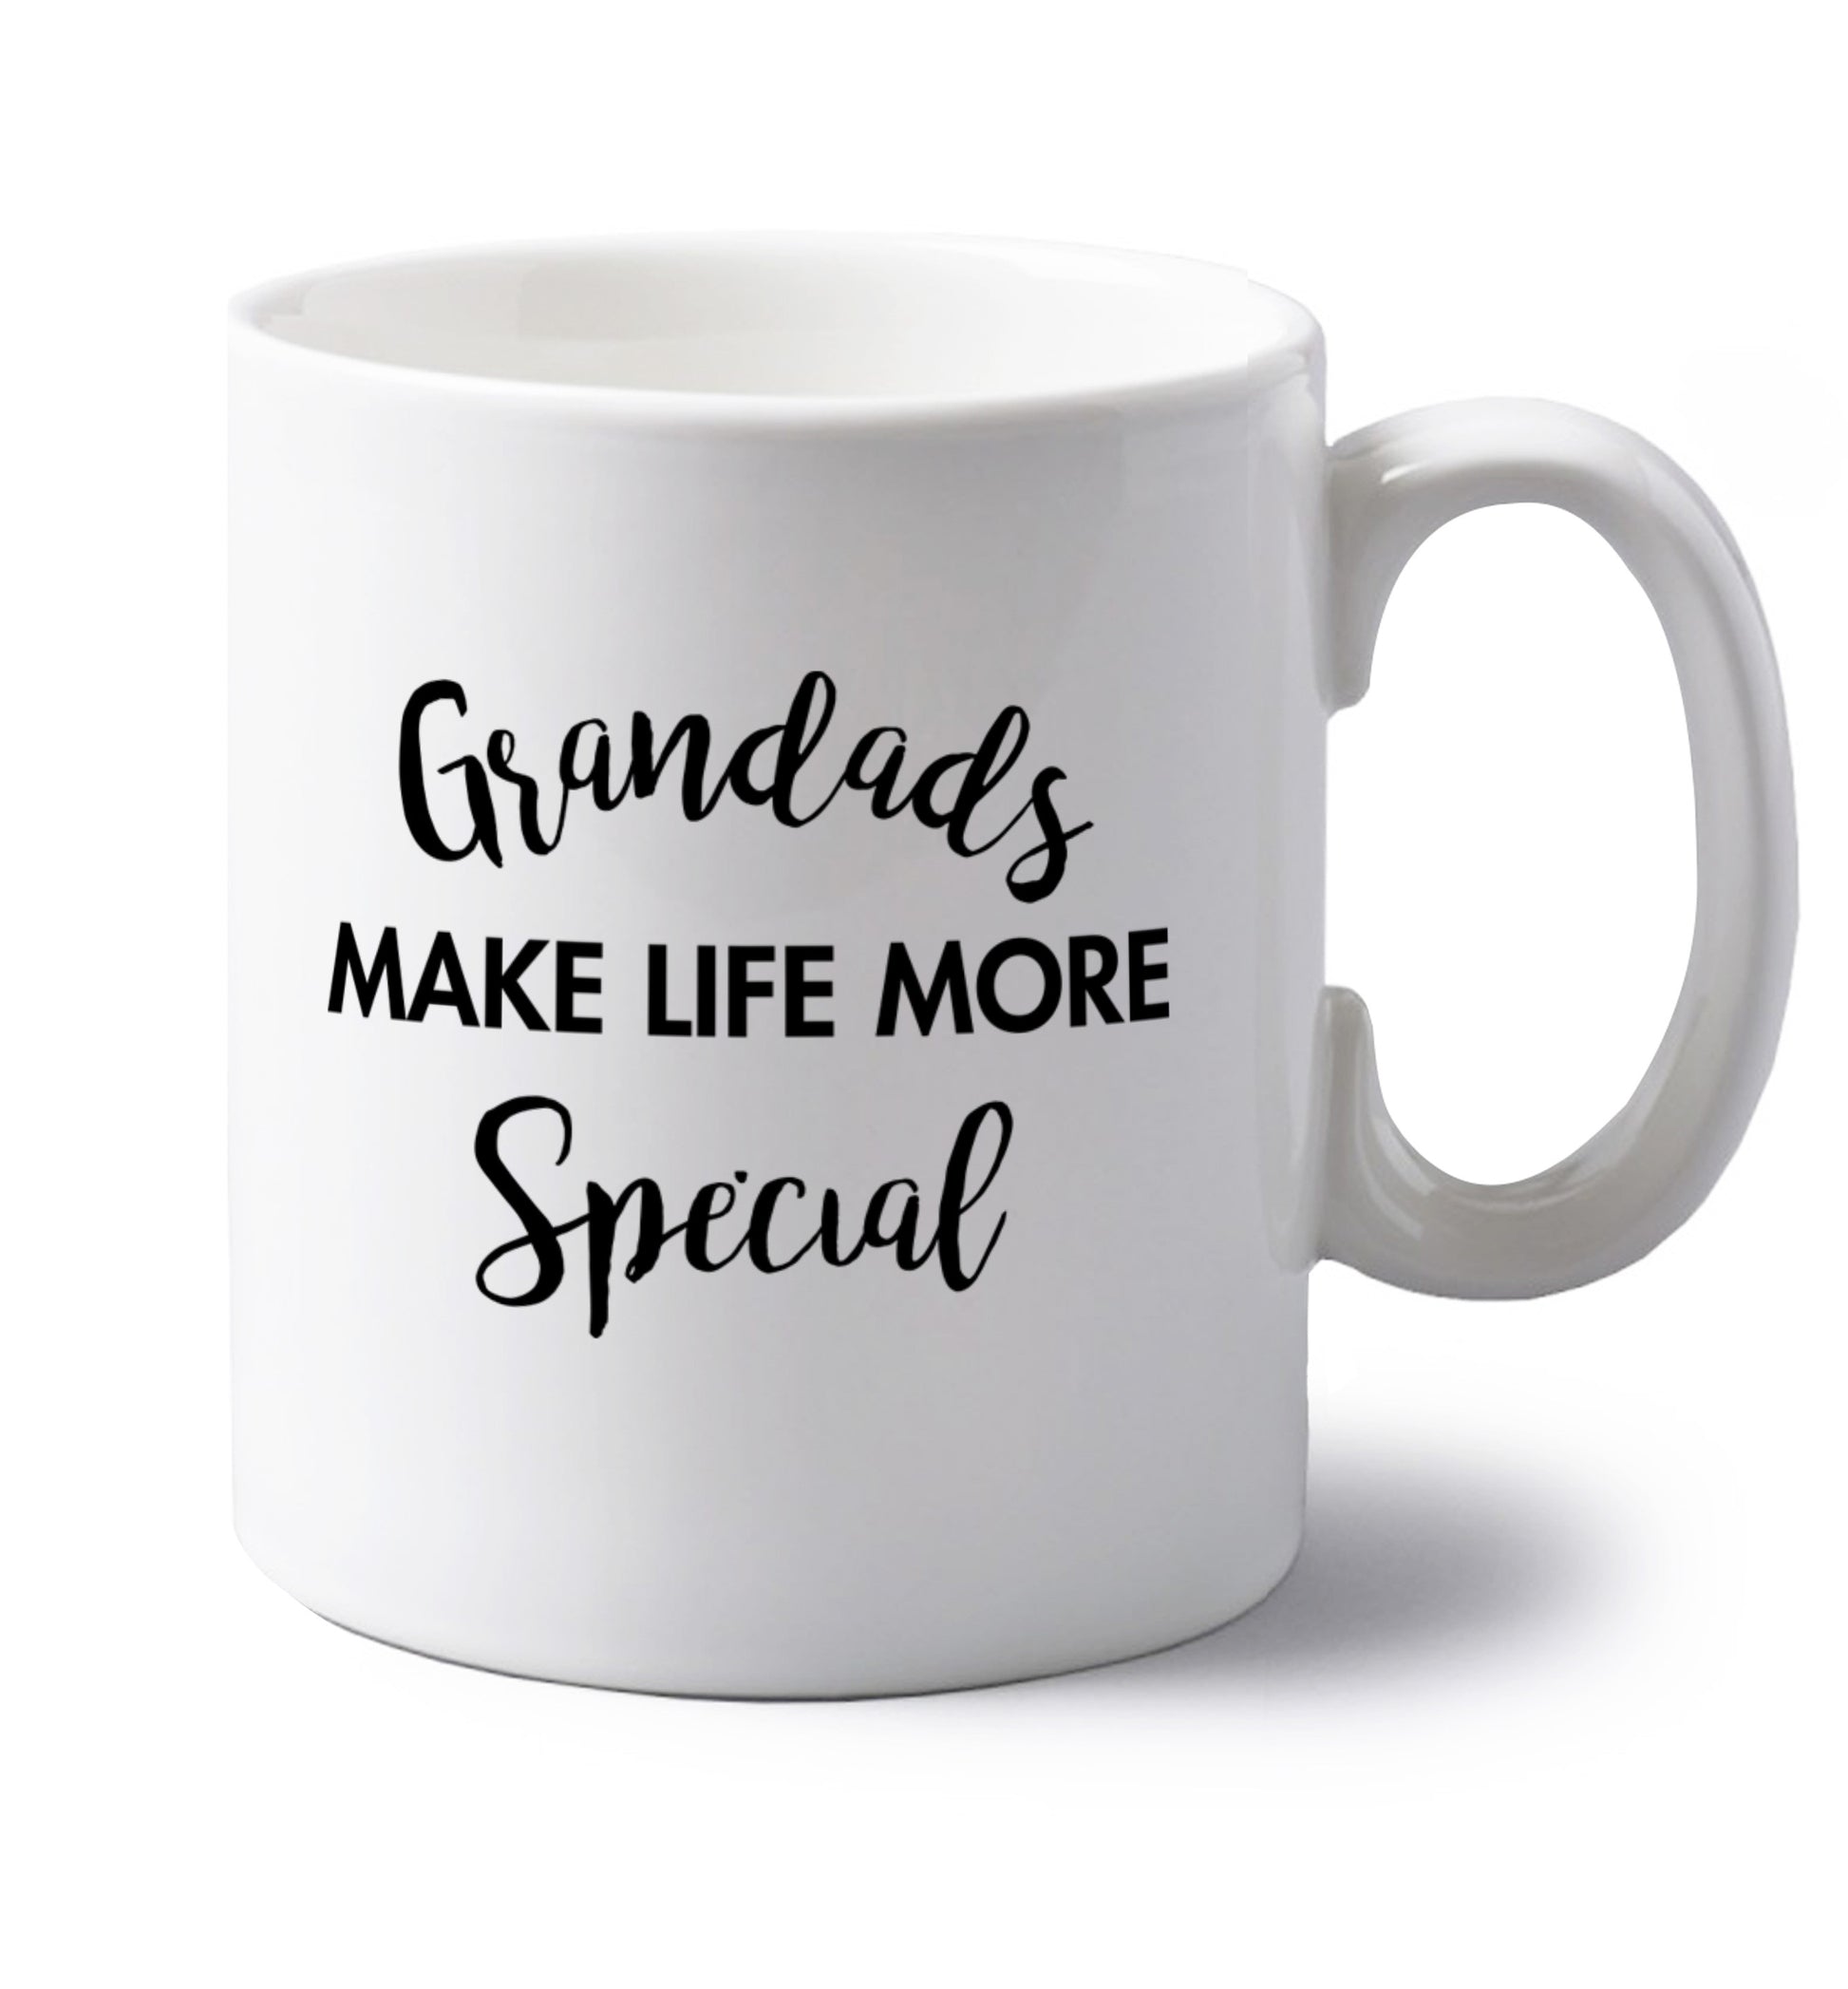 Grandads make life more special left handed white ceramic mug 